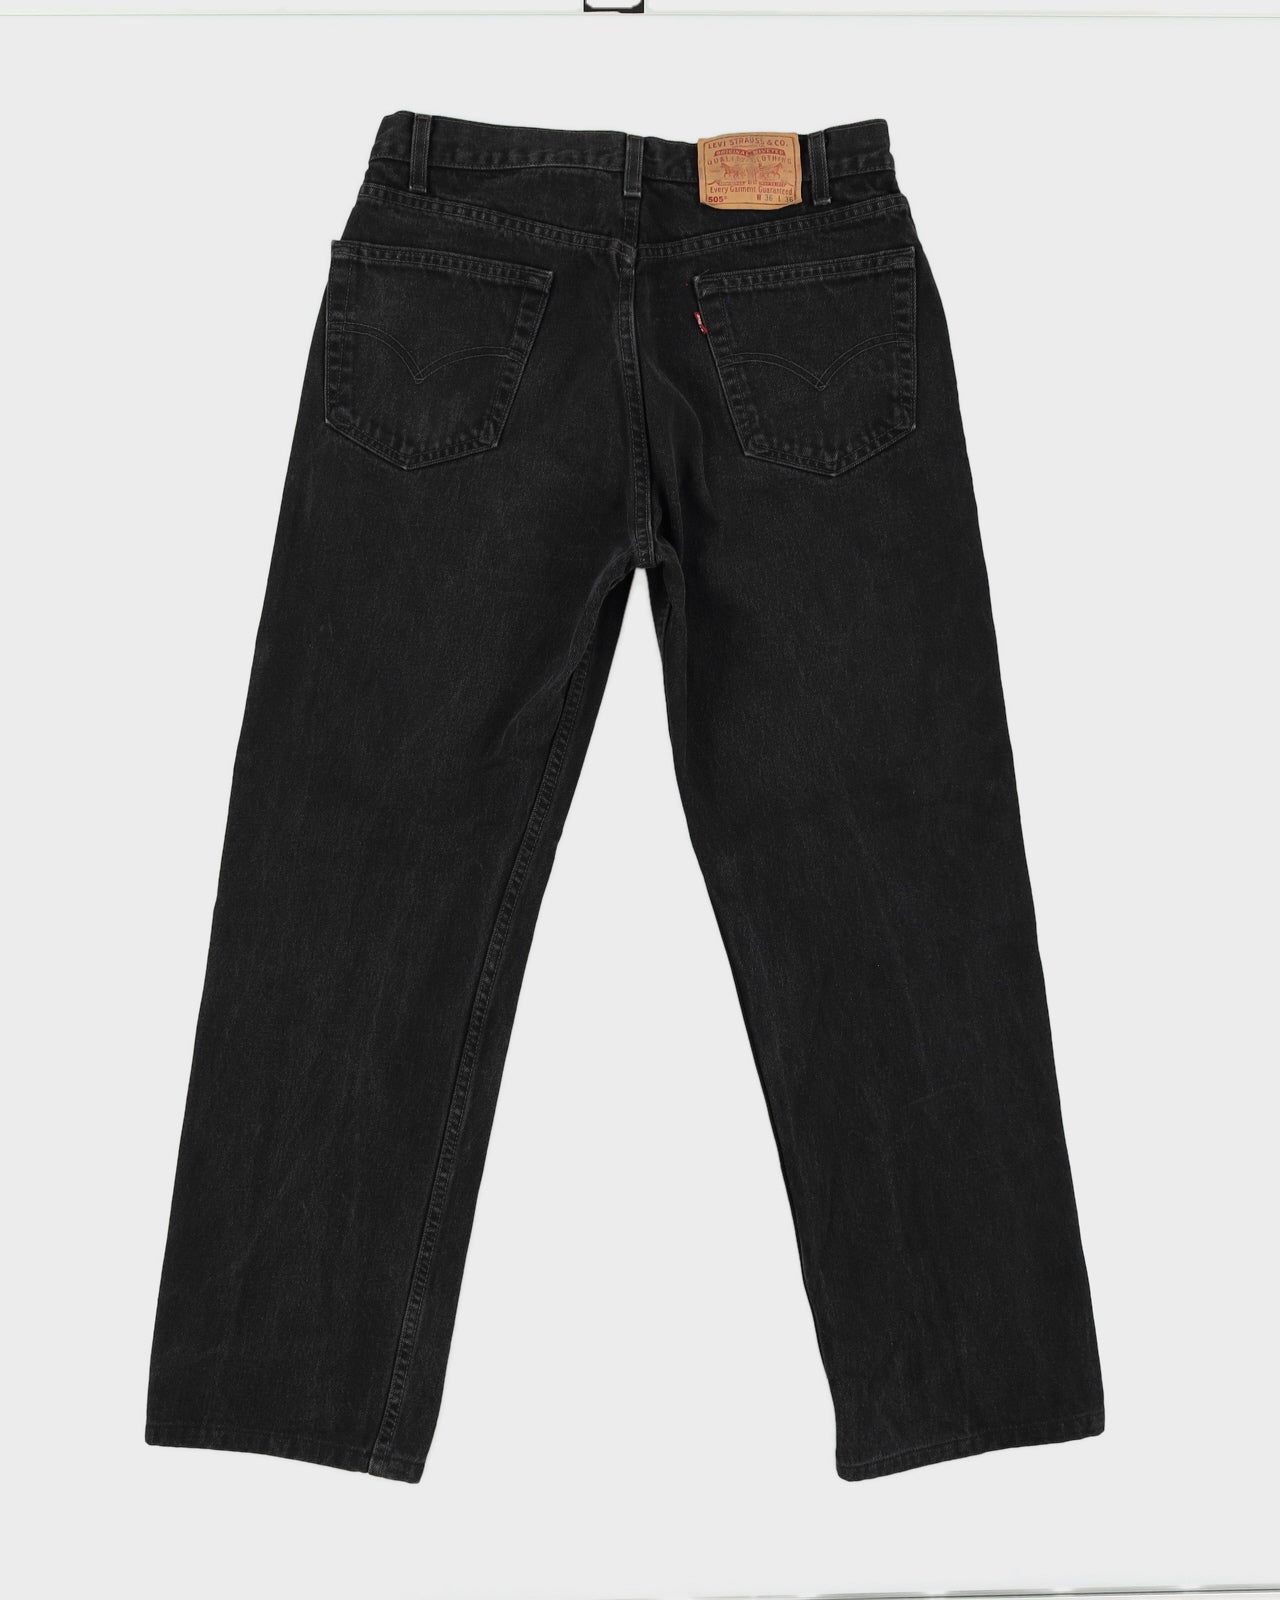 Levi's 505 Black Jeans - W36 L30